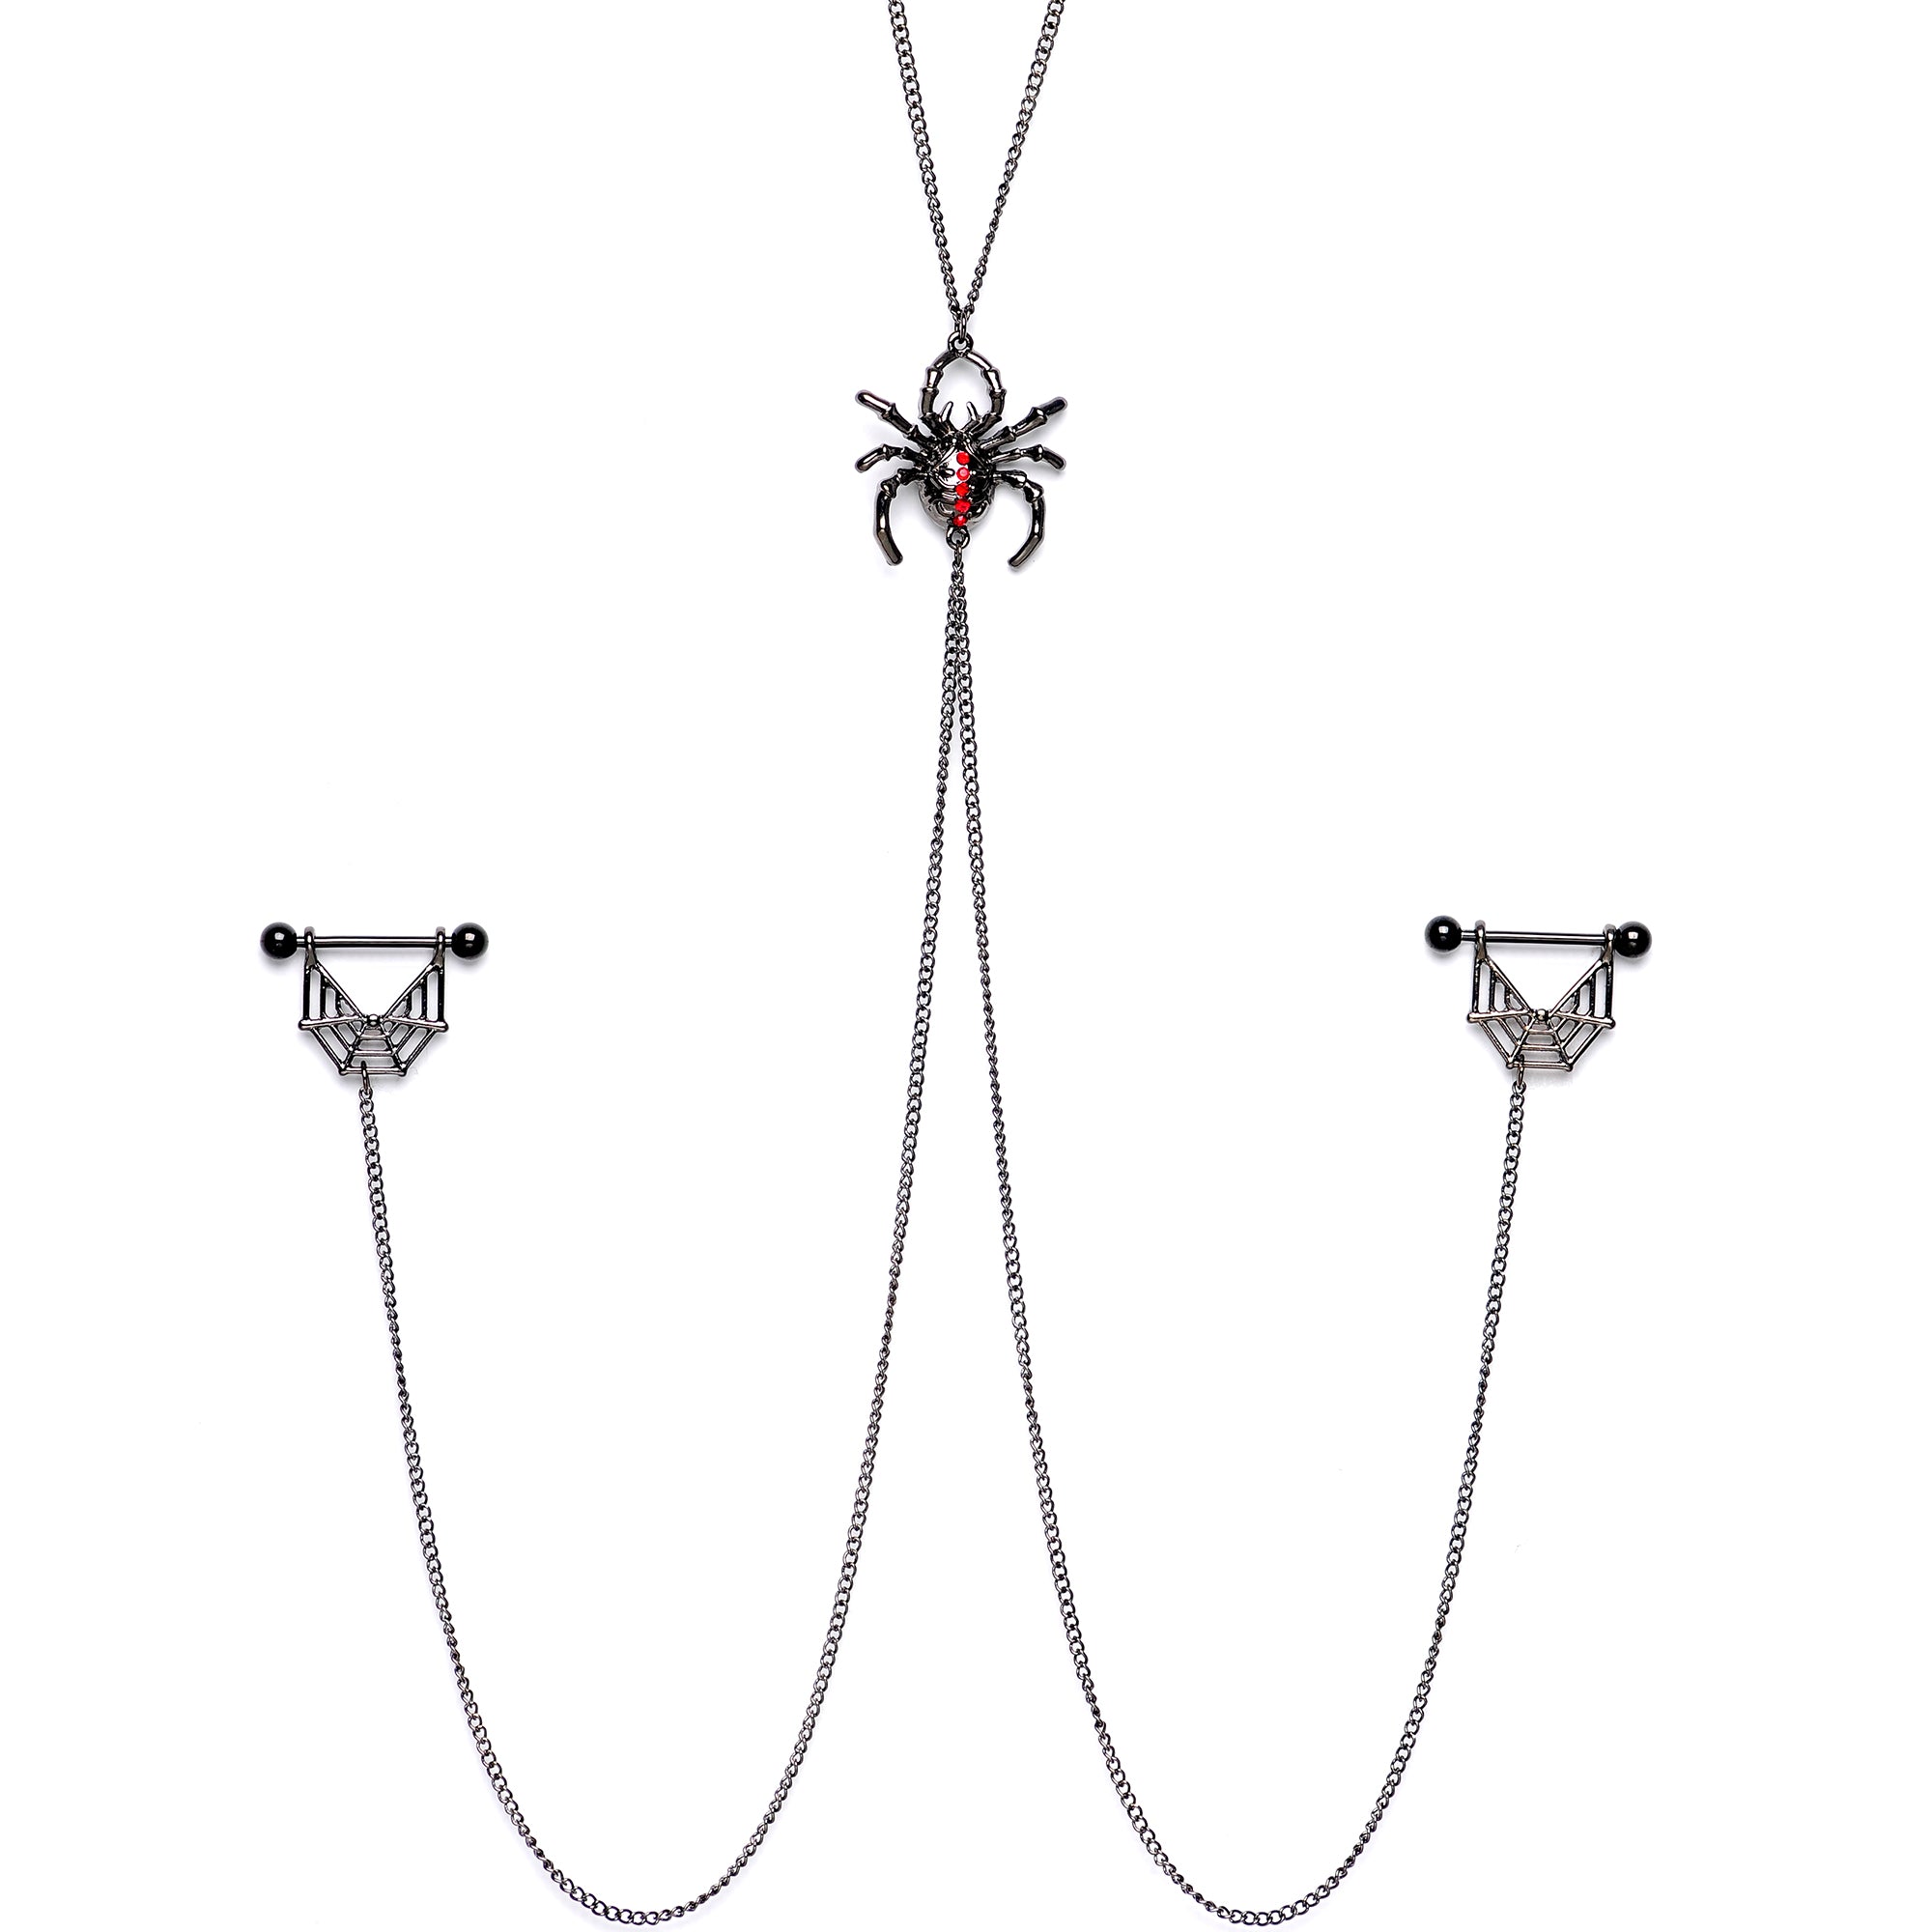 14 Gauge 9/16 Red Gem Black Spider Web Halloween Nipple Chain Necklace